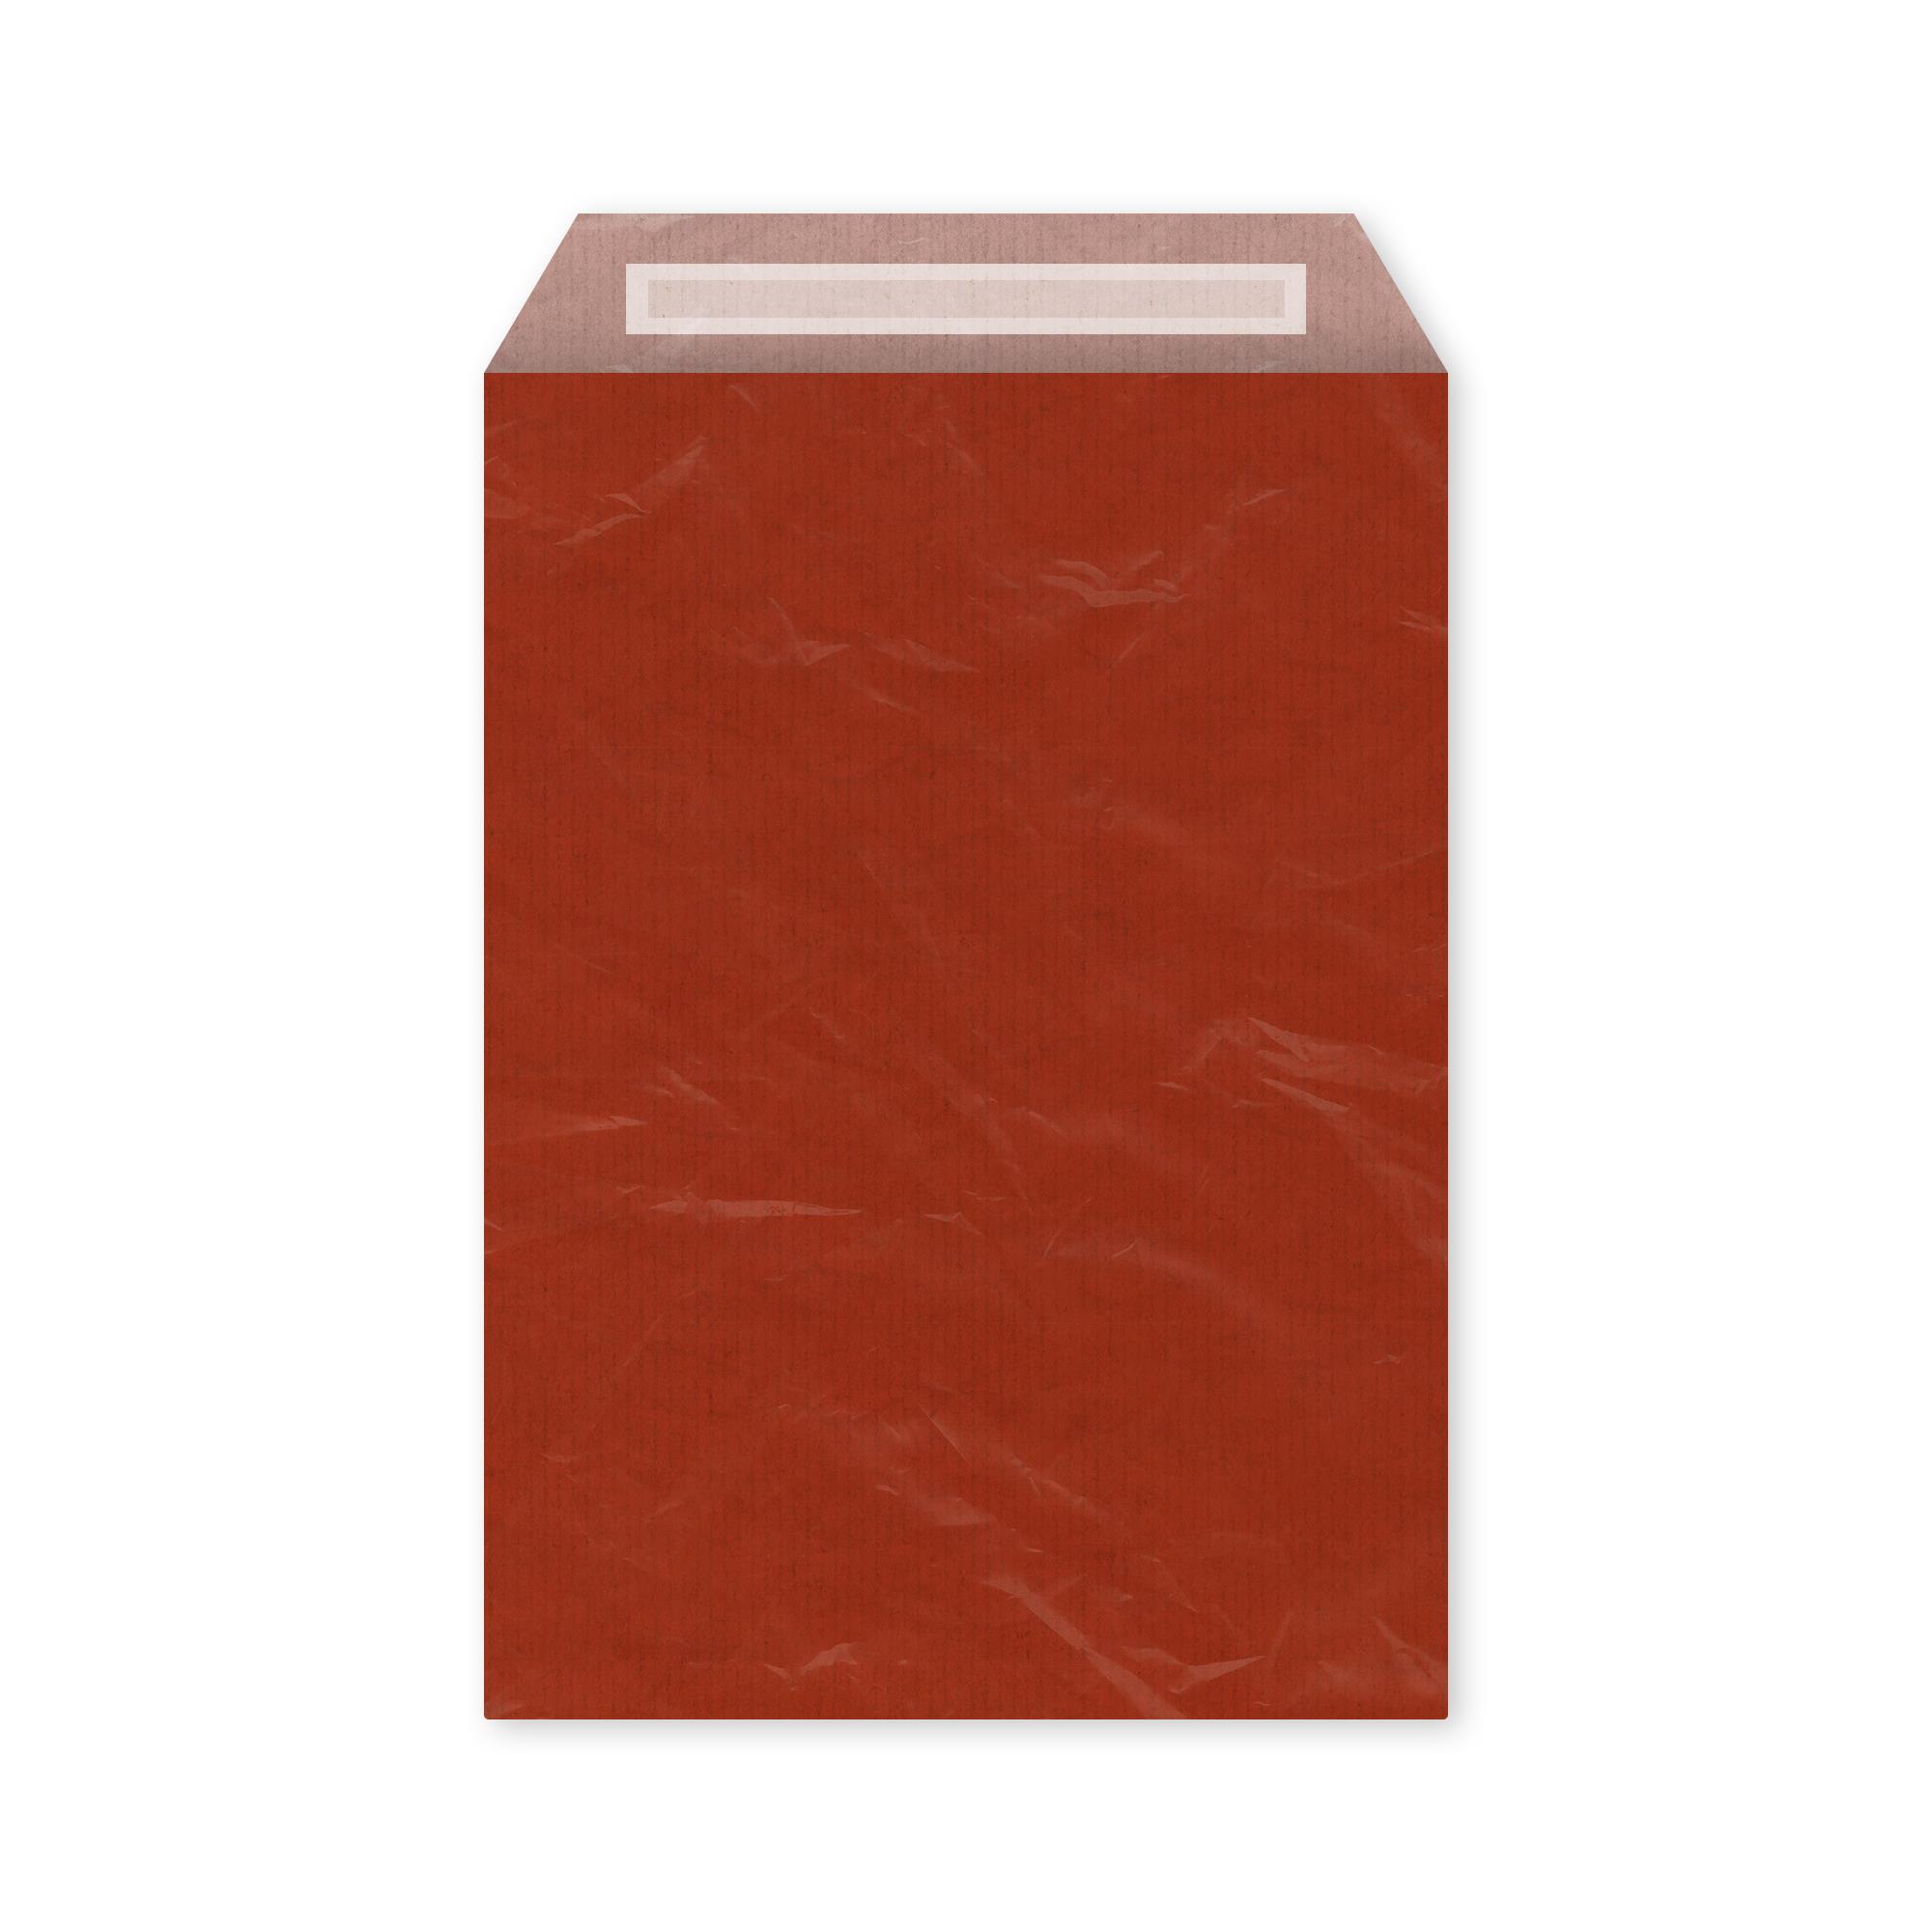 Bantlı Hediye Paketi Kağıt Kırmızı 30x8x40,5 cm - 25 Adet